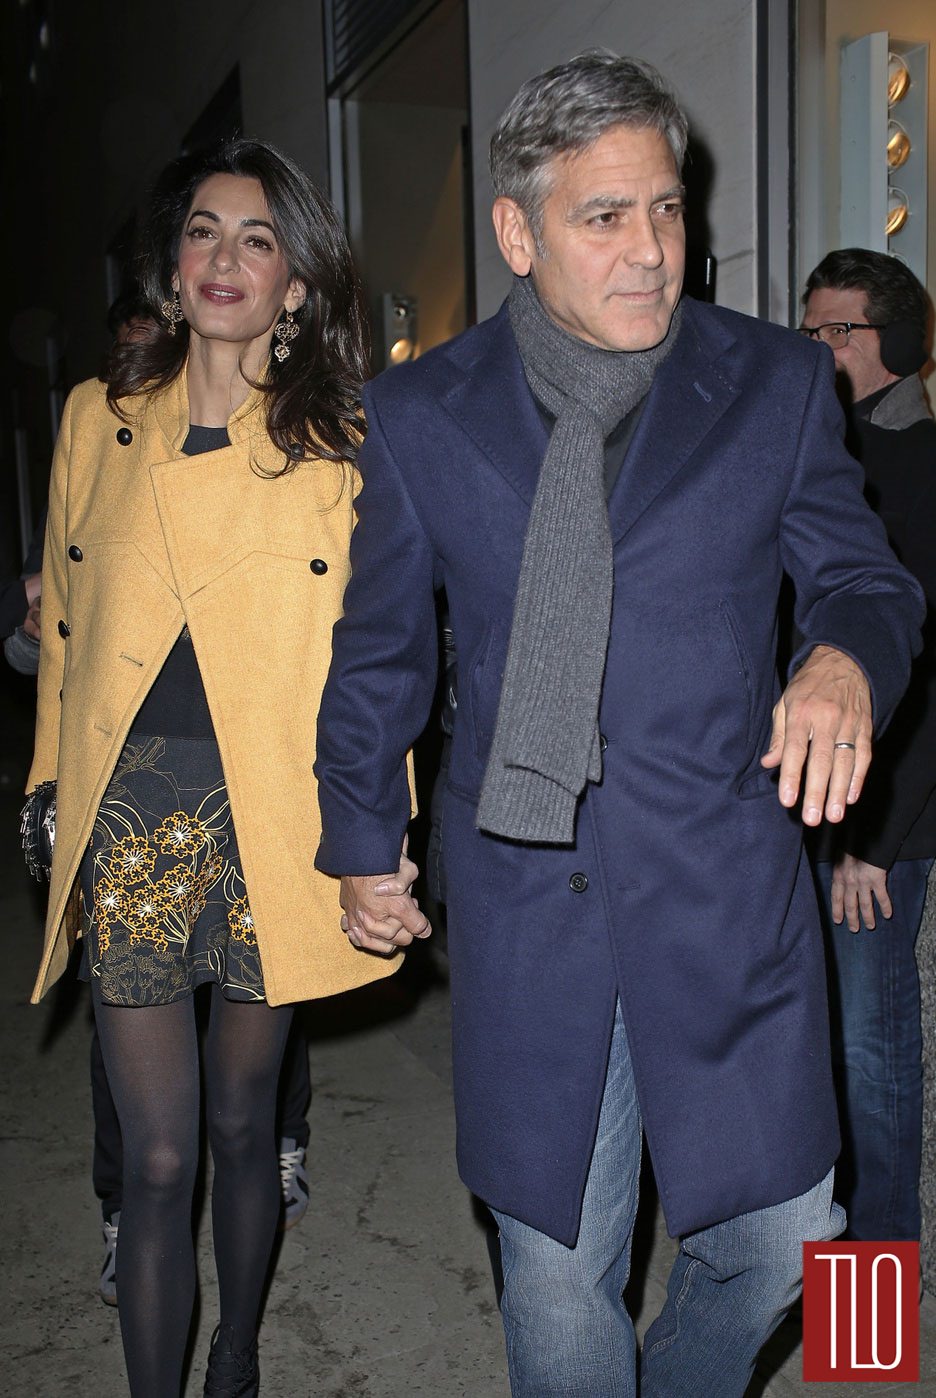 George-Clooney-Amal-Allamudin-Clooney-GOTS-NYC-Paul-Joe-Giambattista-Valli-STreet-Style-Tom-Lorenzo-Site-TLO (1)